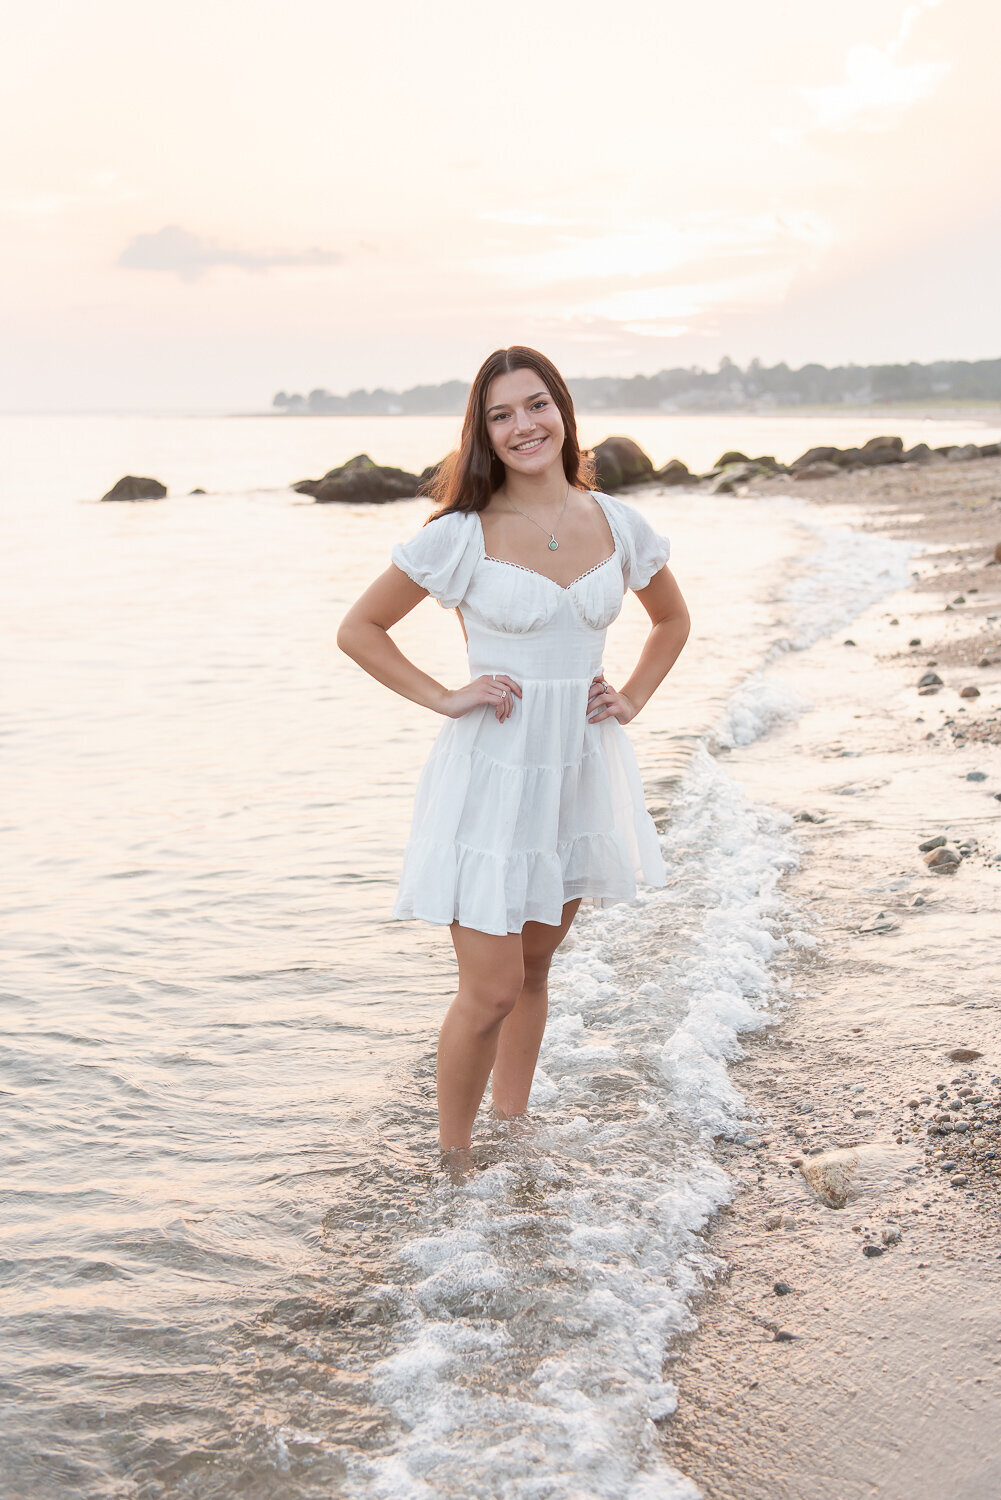 Girl in white dress standing in ocean for senior photo shoot |Sharon Leger Photography | Canton, CT Newborn & Family Photographer